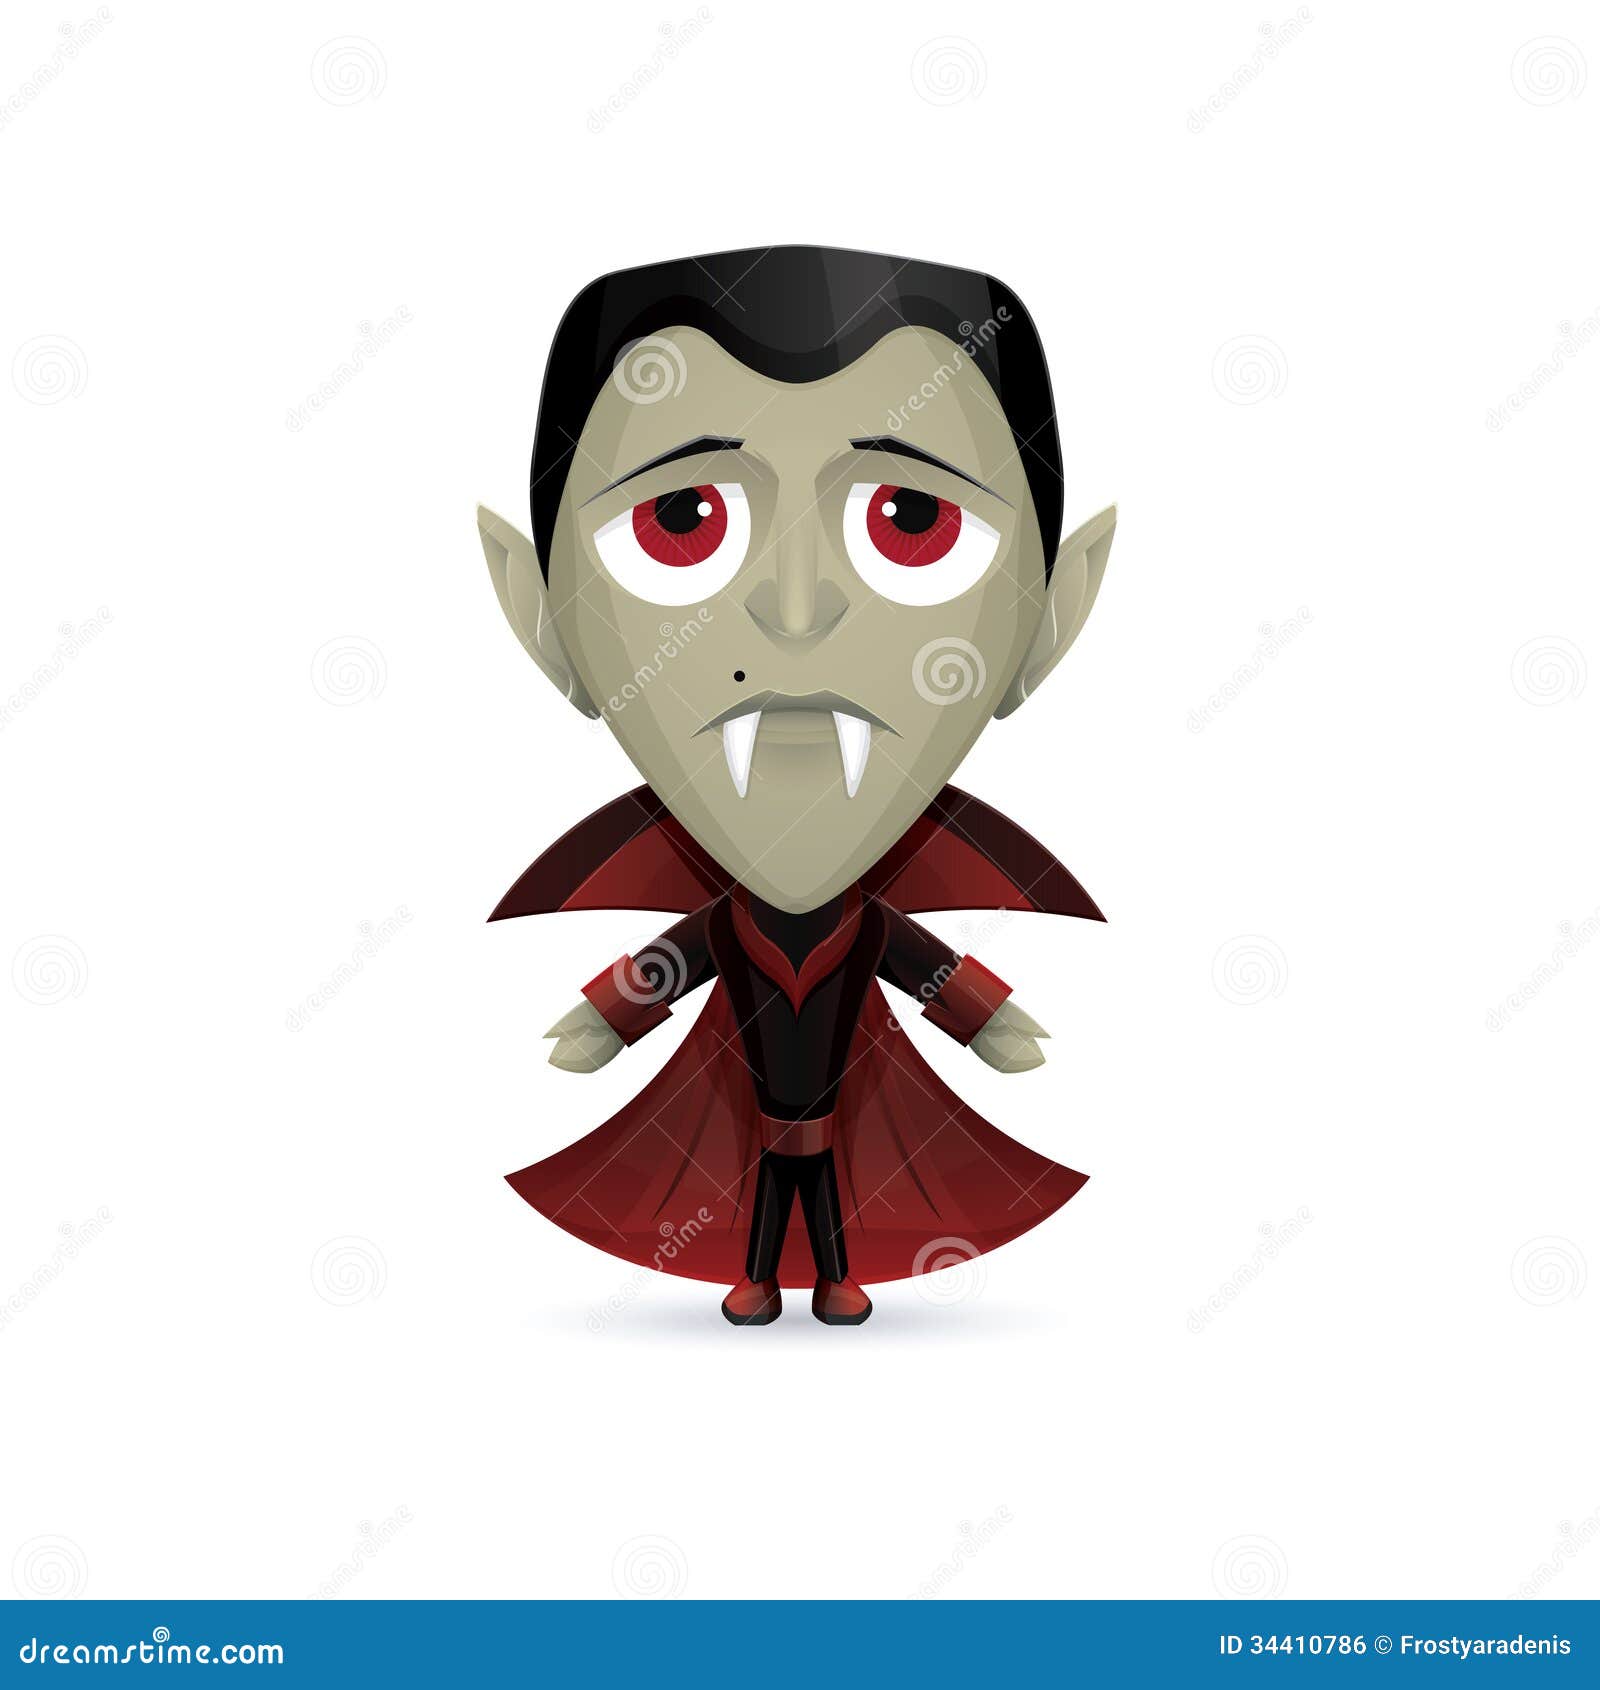 dracula-character-sad-vampire-dark-suit-mole-near-his-nose-34410786.jpg